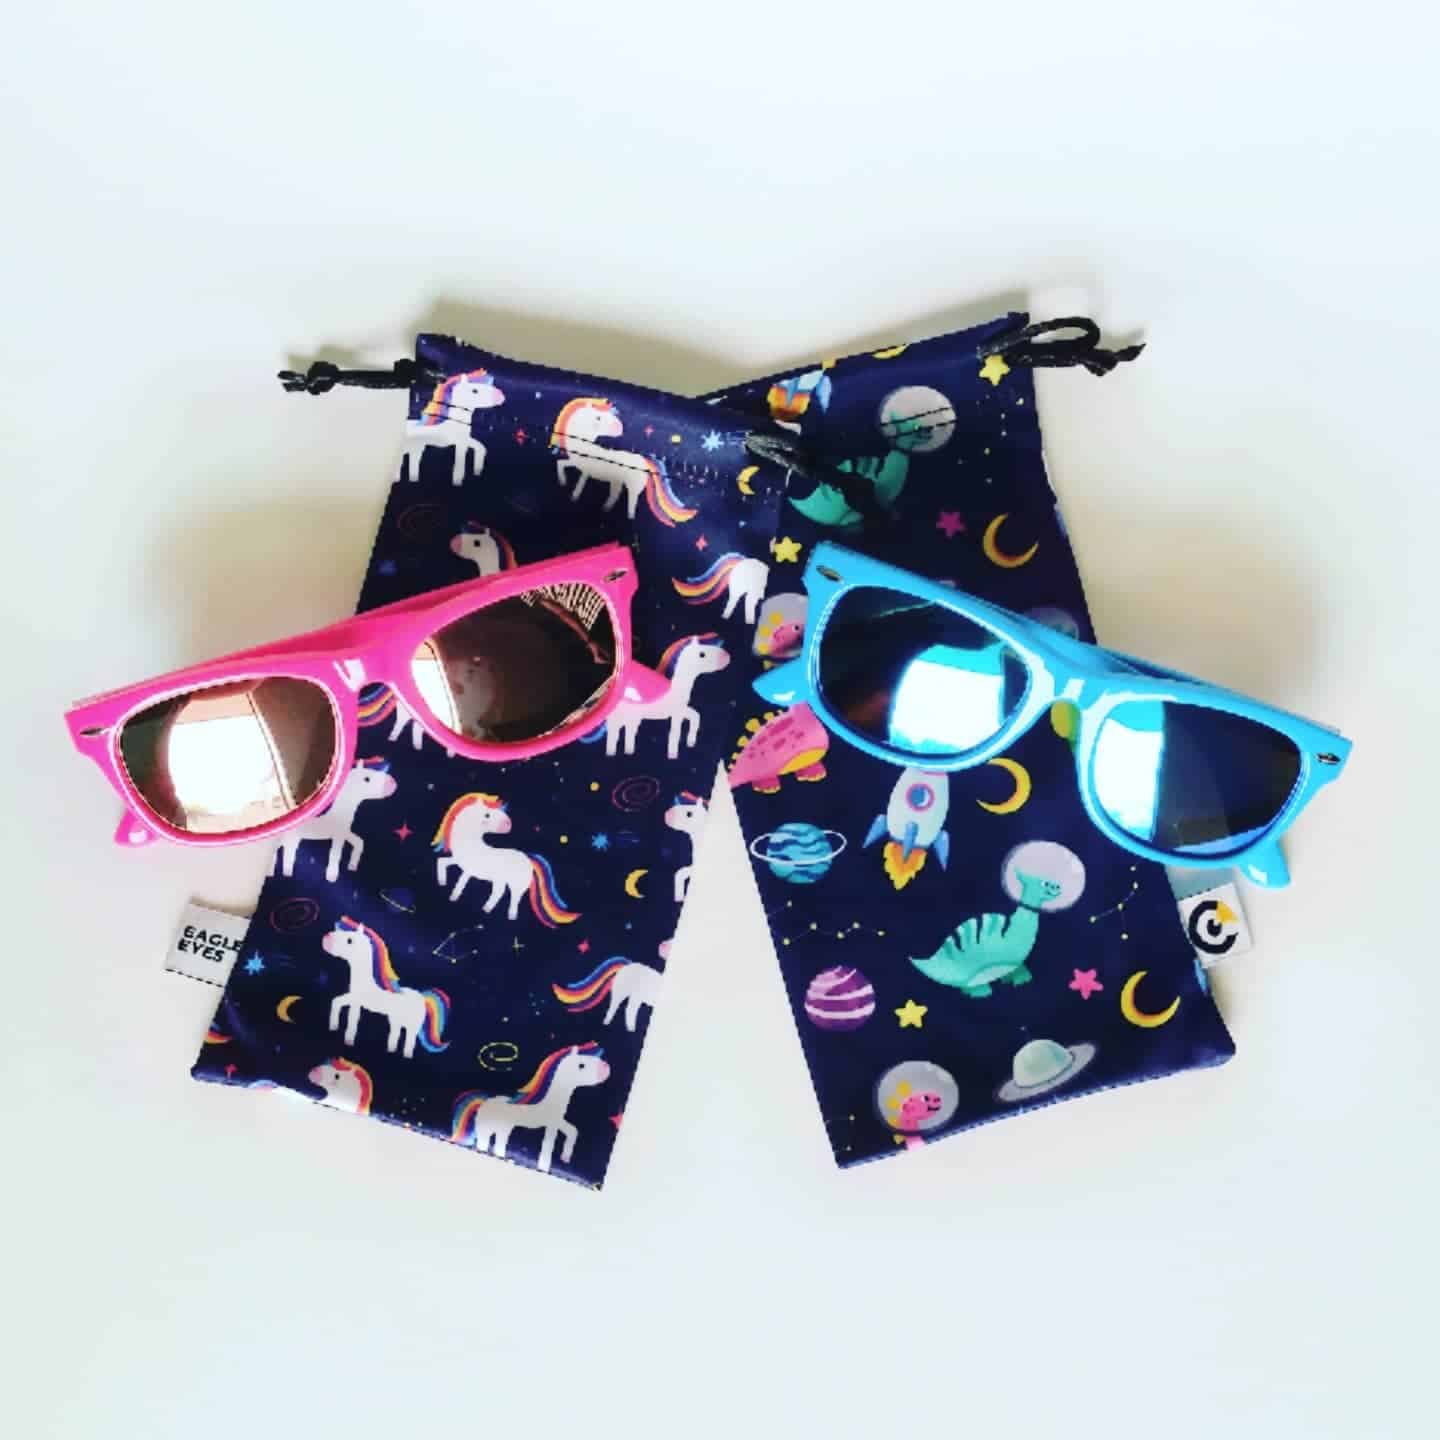 Eagle Eyes Kids Sunglasses - Flexible, colourful options with custom sunglass cases